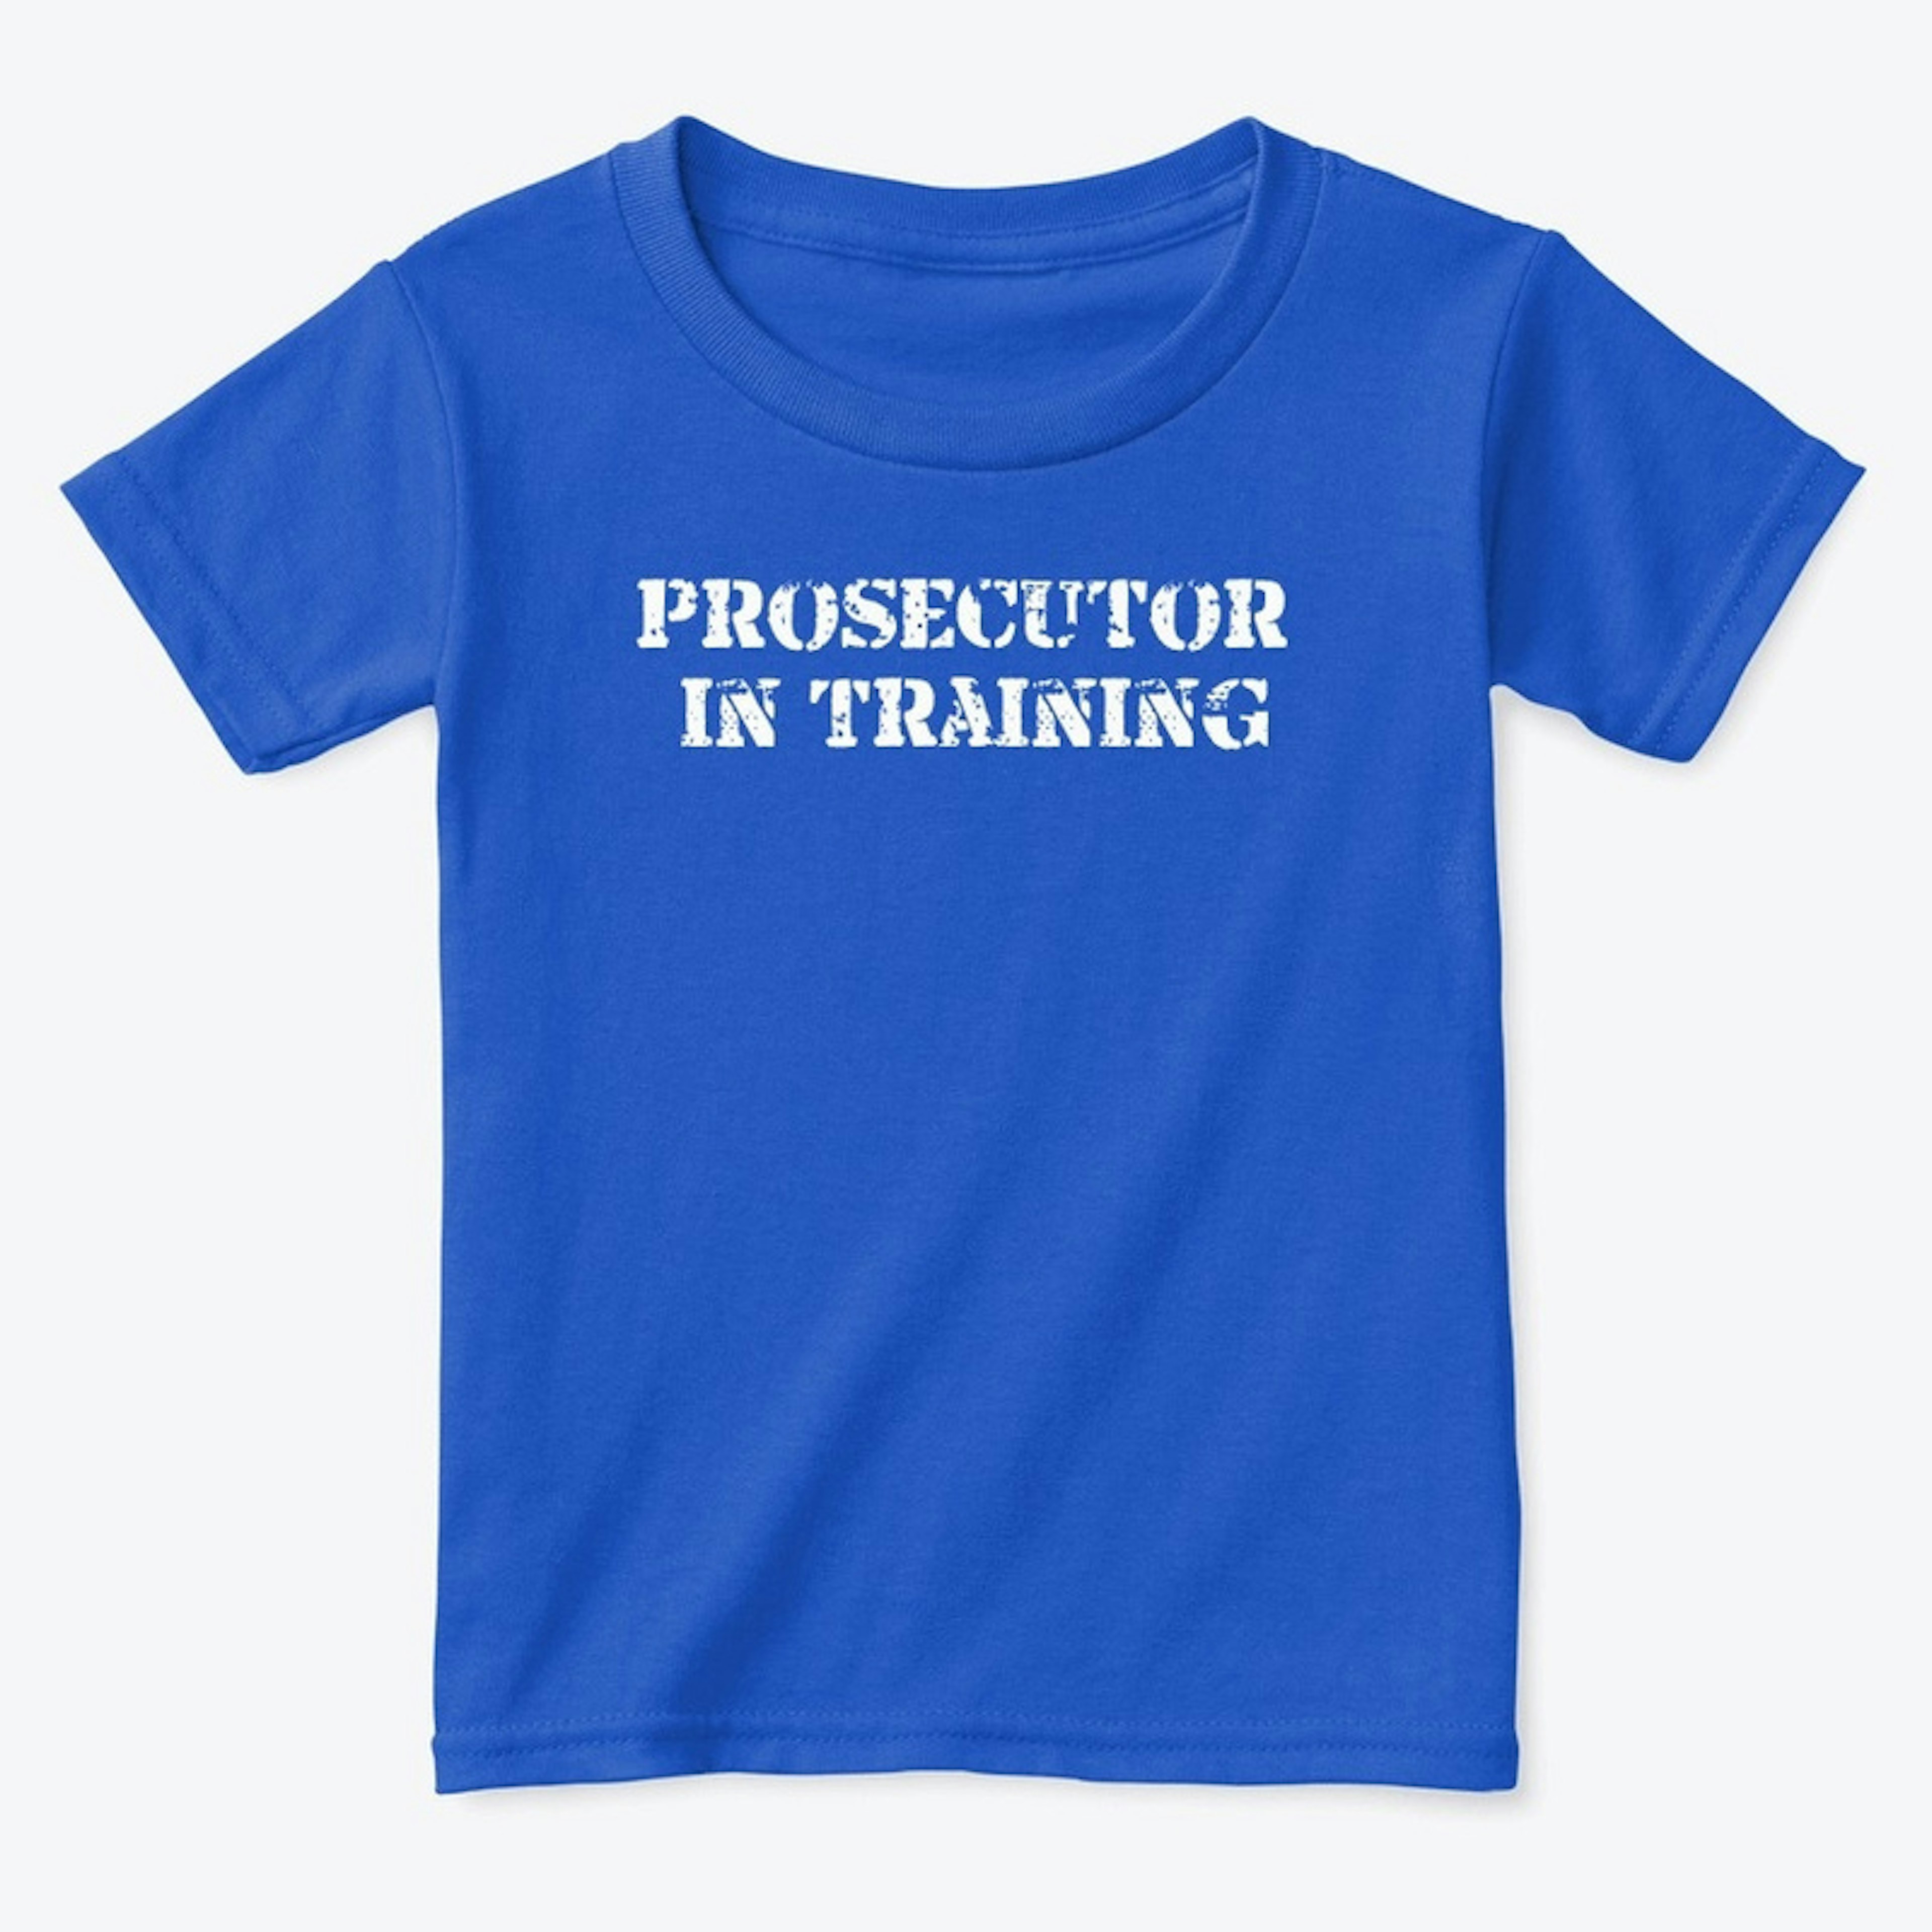 Prosecutor in Training Kids Tee